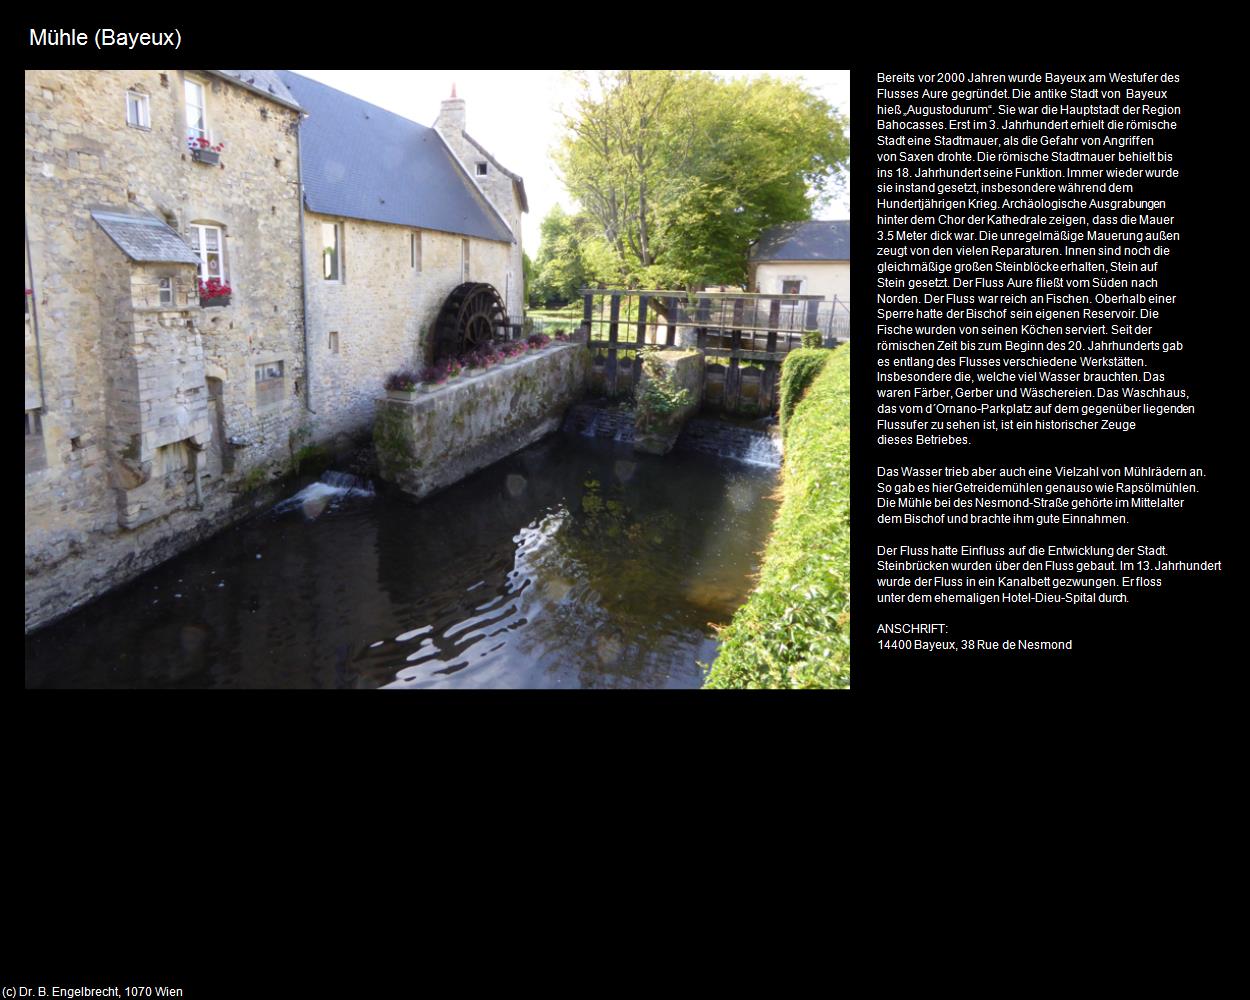 Mühle (Bayeux (FR-NOR)) in Kulturatlas-FRANKREICH